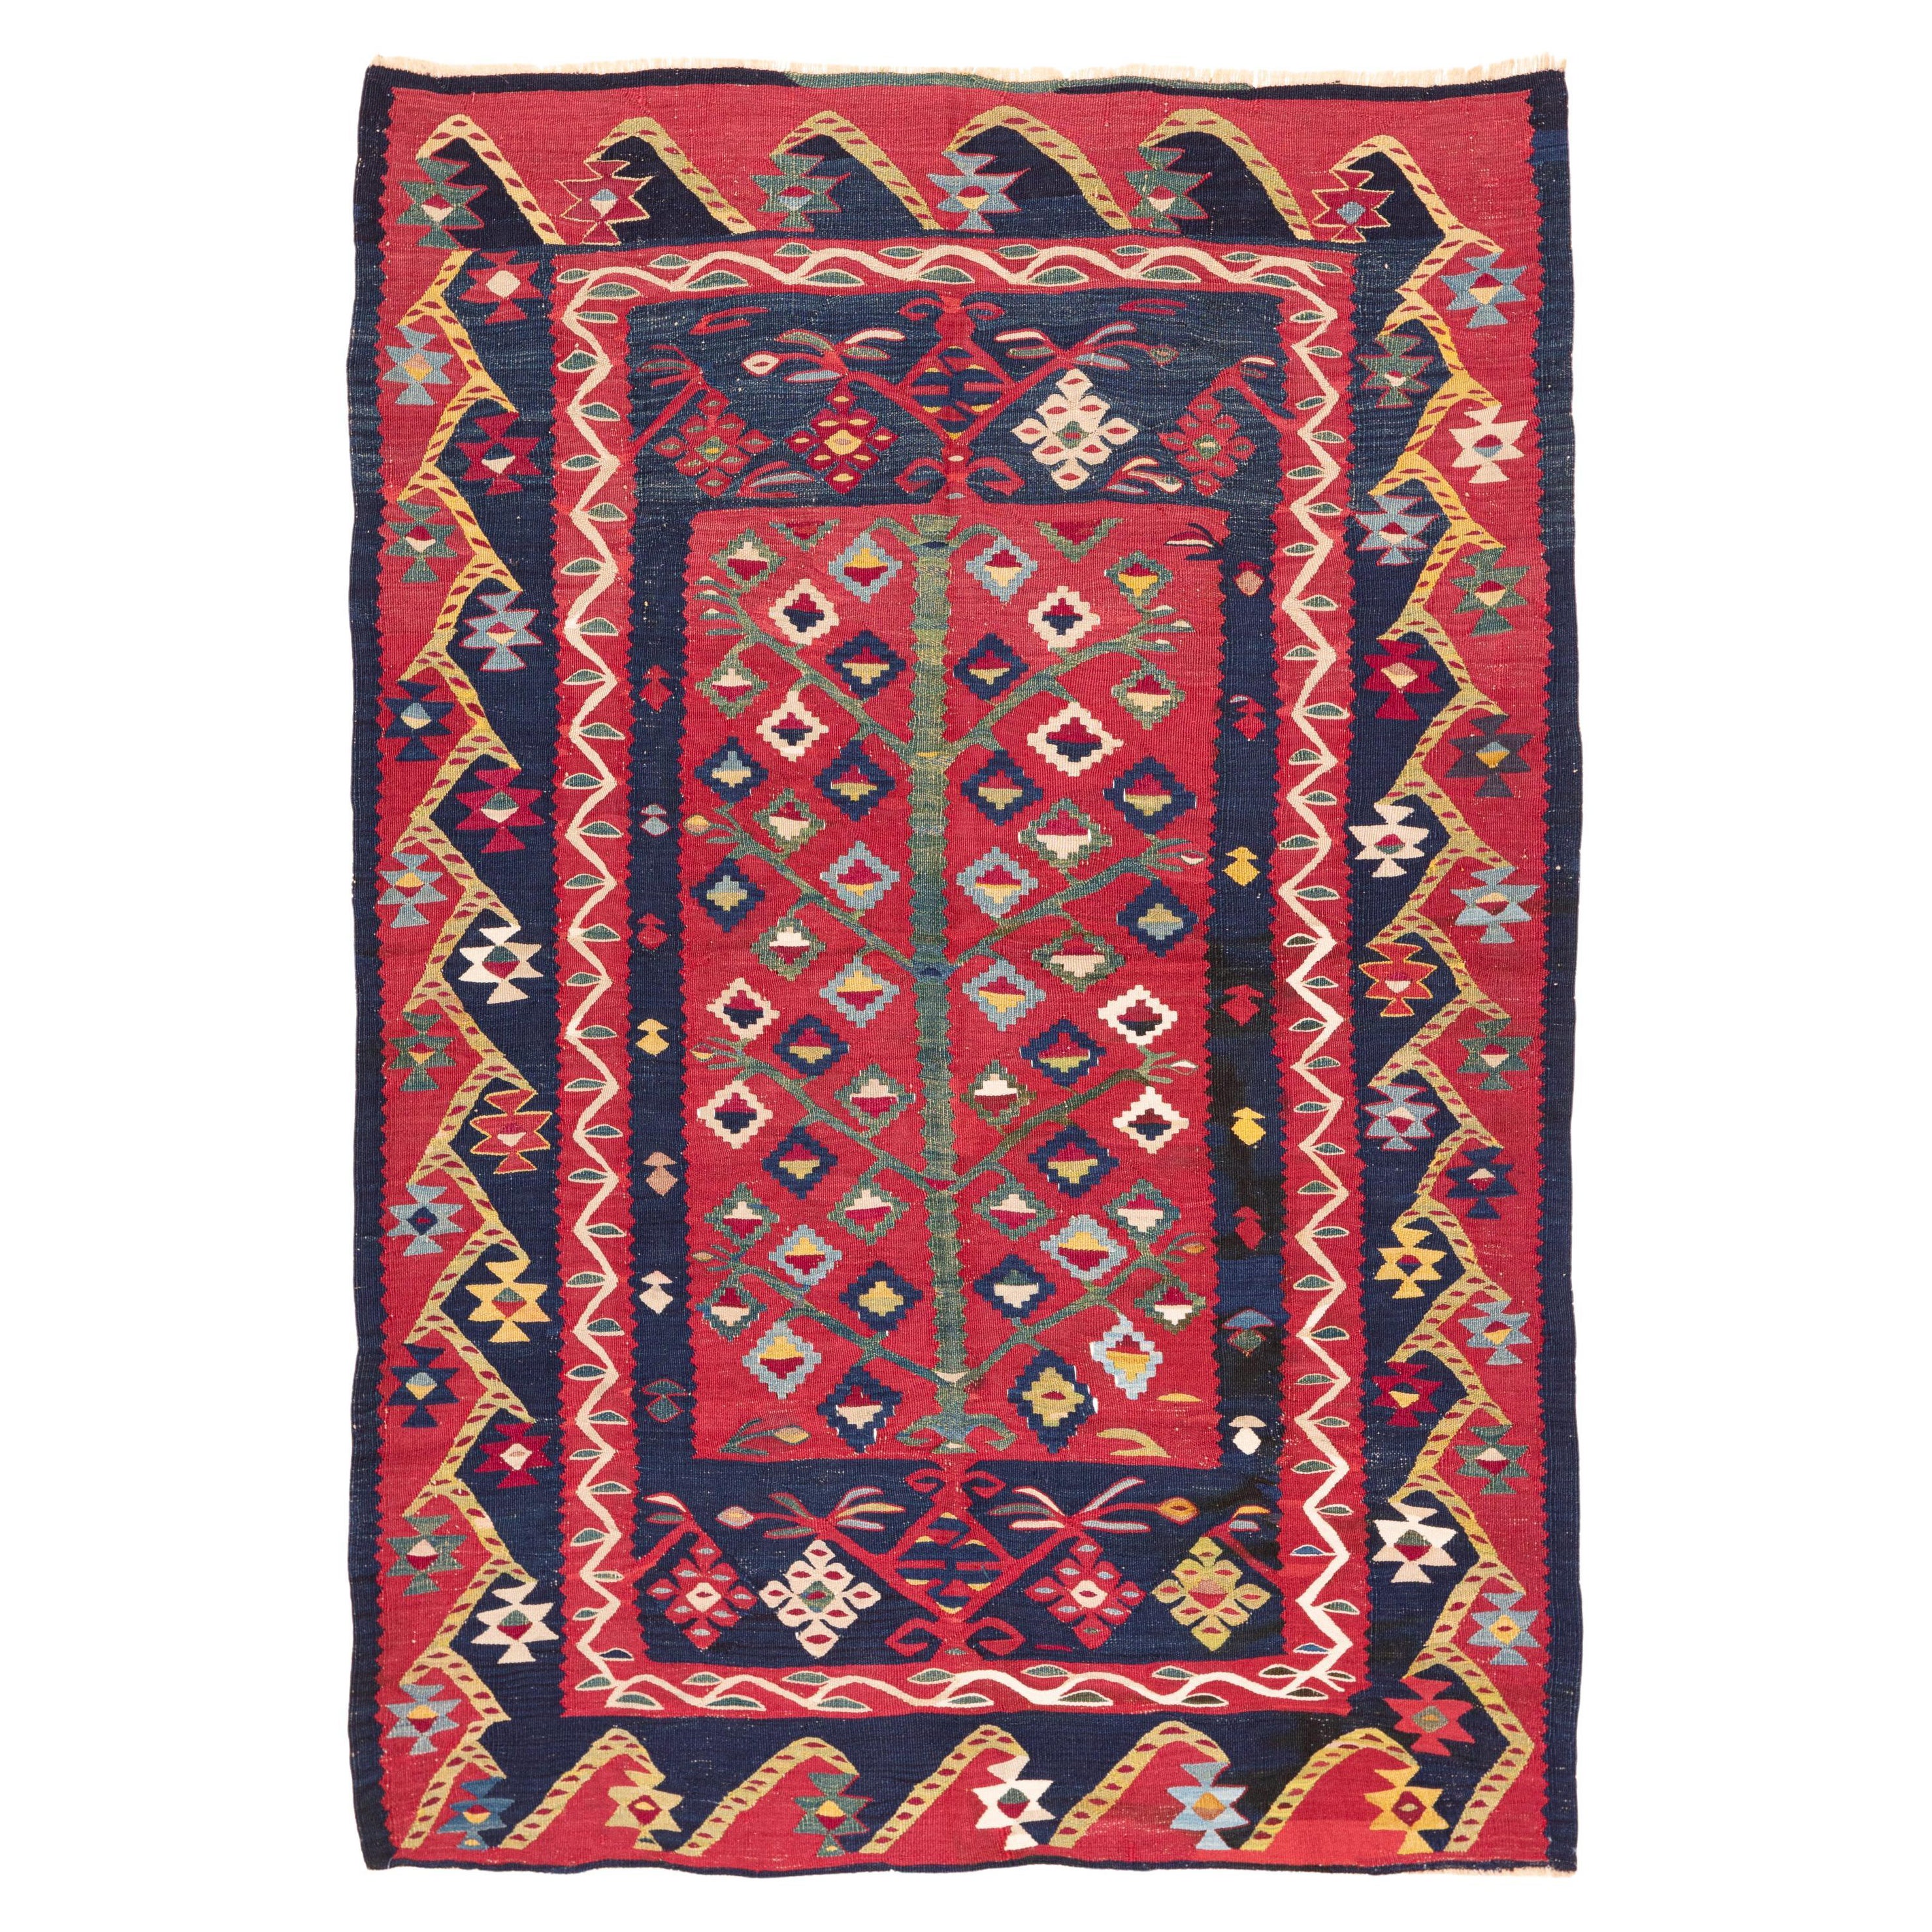 Antique Sarkoy Kilim Rug, Western Anatolian Turkish Carpet, Balkan Style Unique